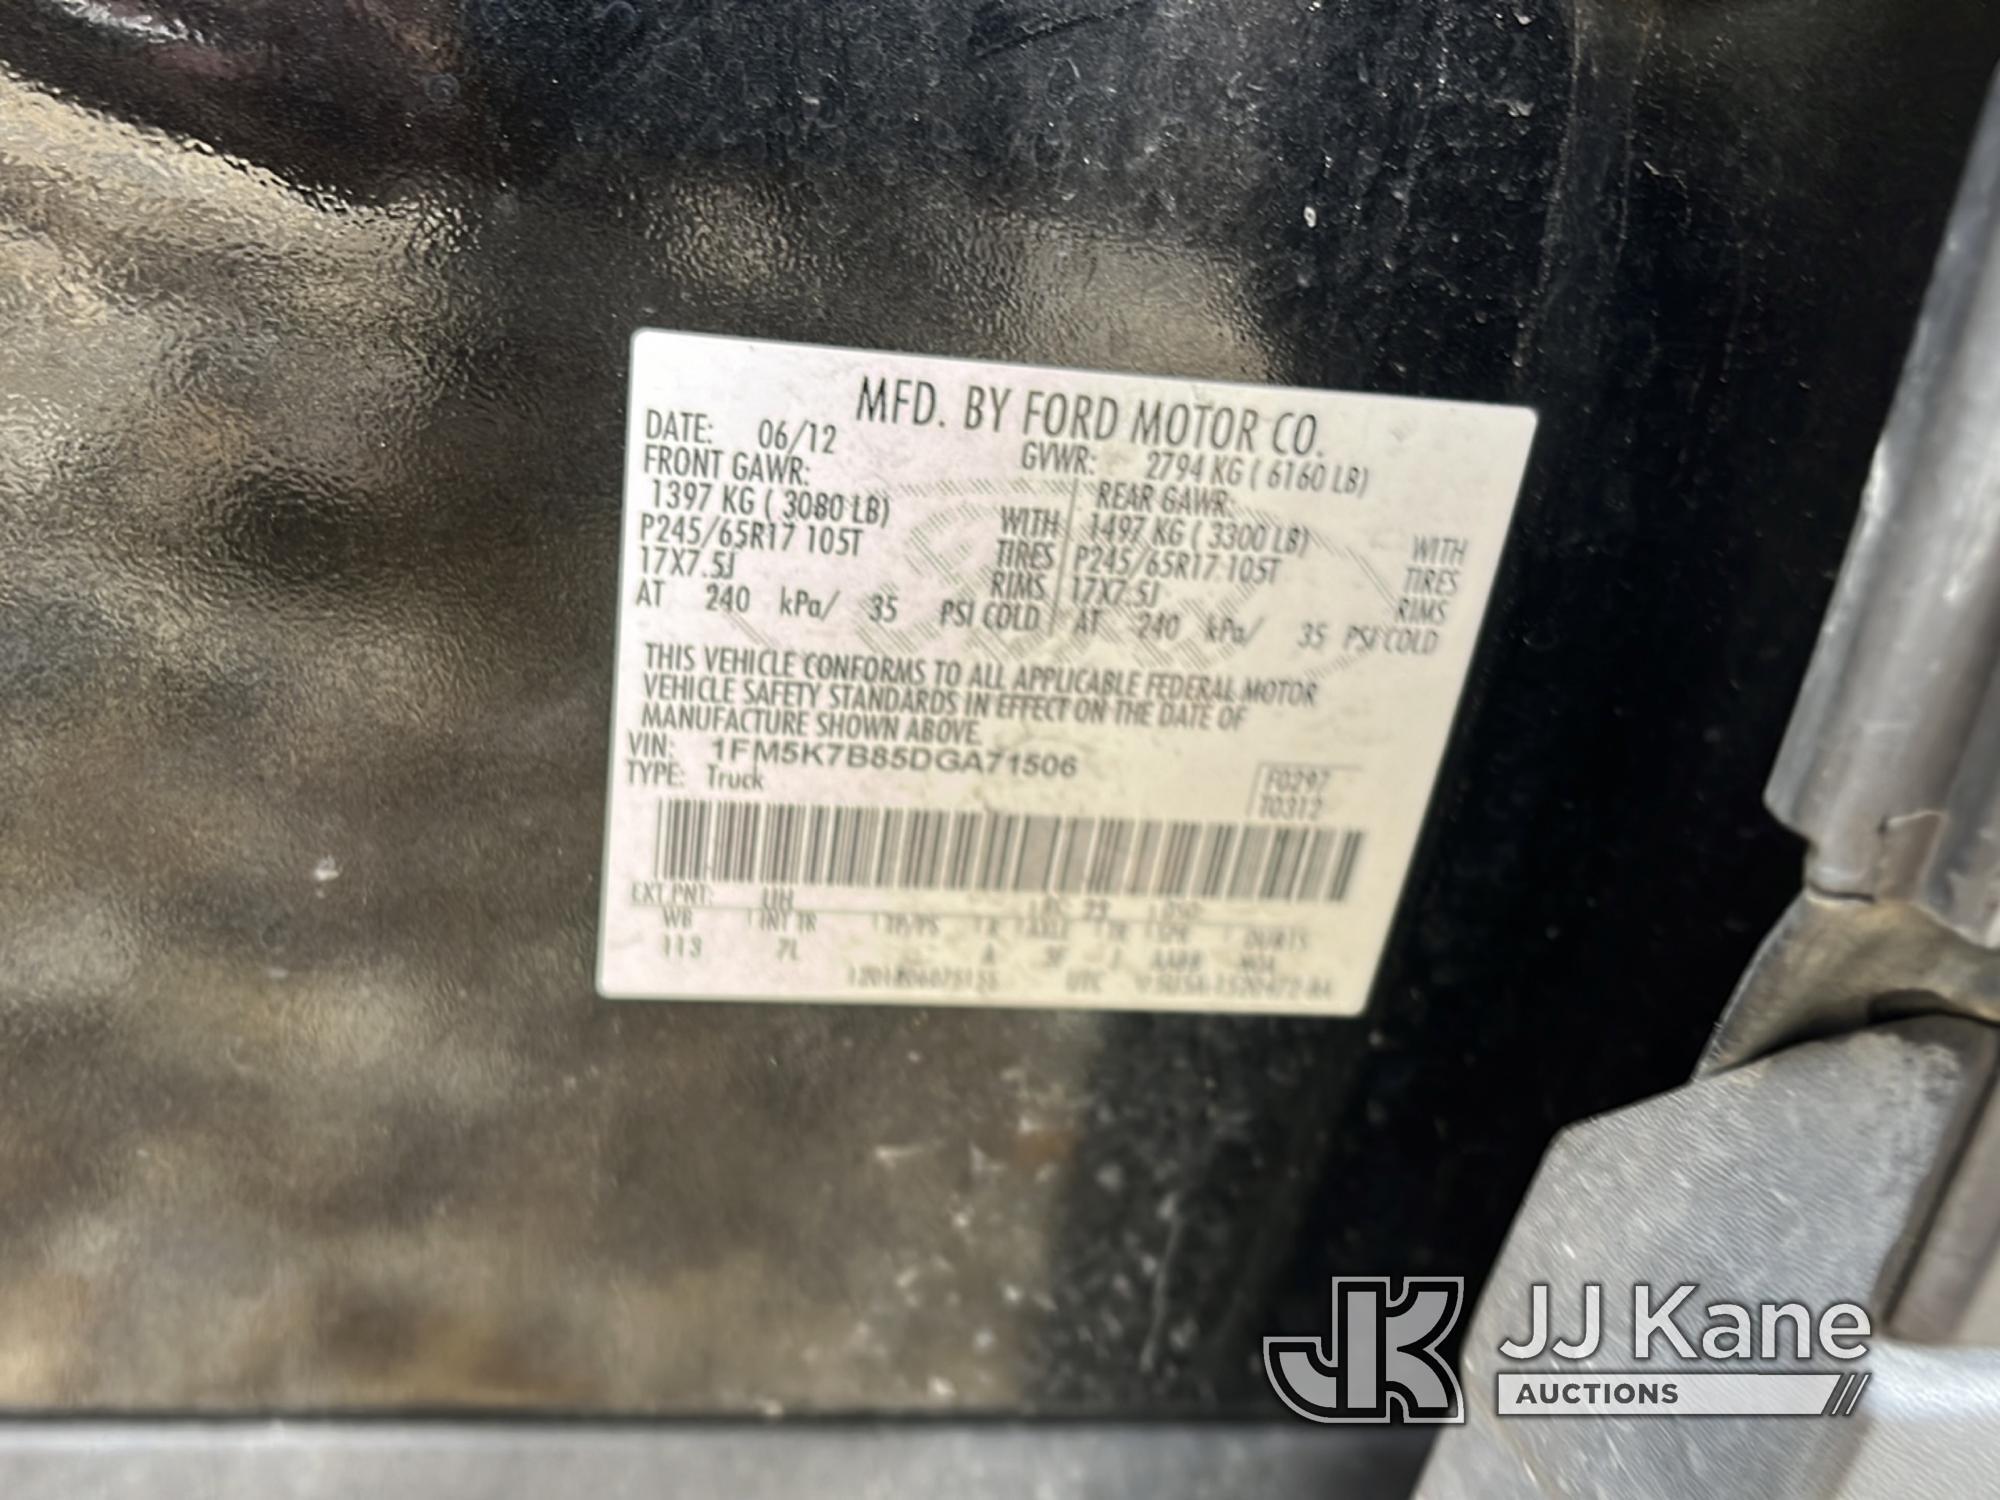 (Robert, LA) 2013 Ford Explorer 4-Door Sport Utility Vehicle Not Running, Condition Unknown) (Per Se